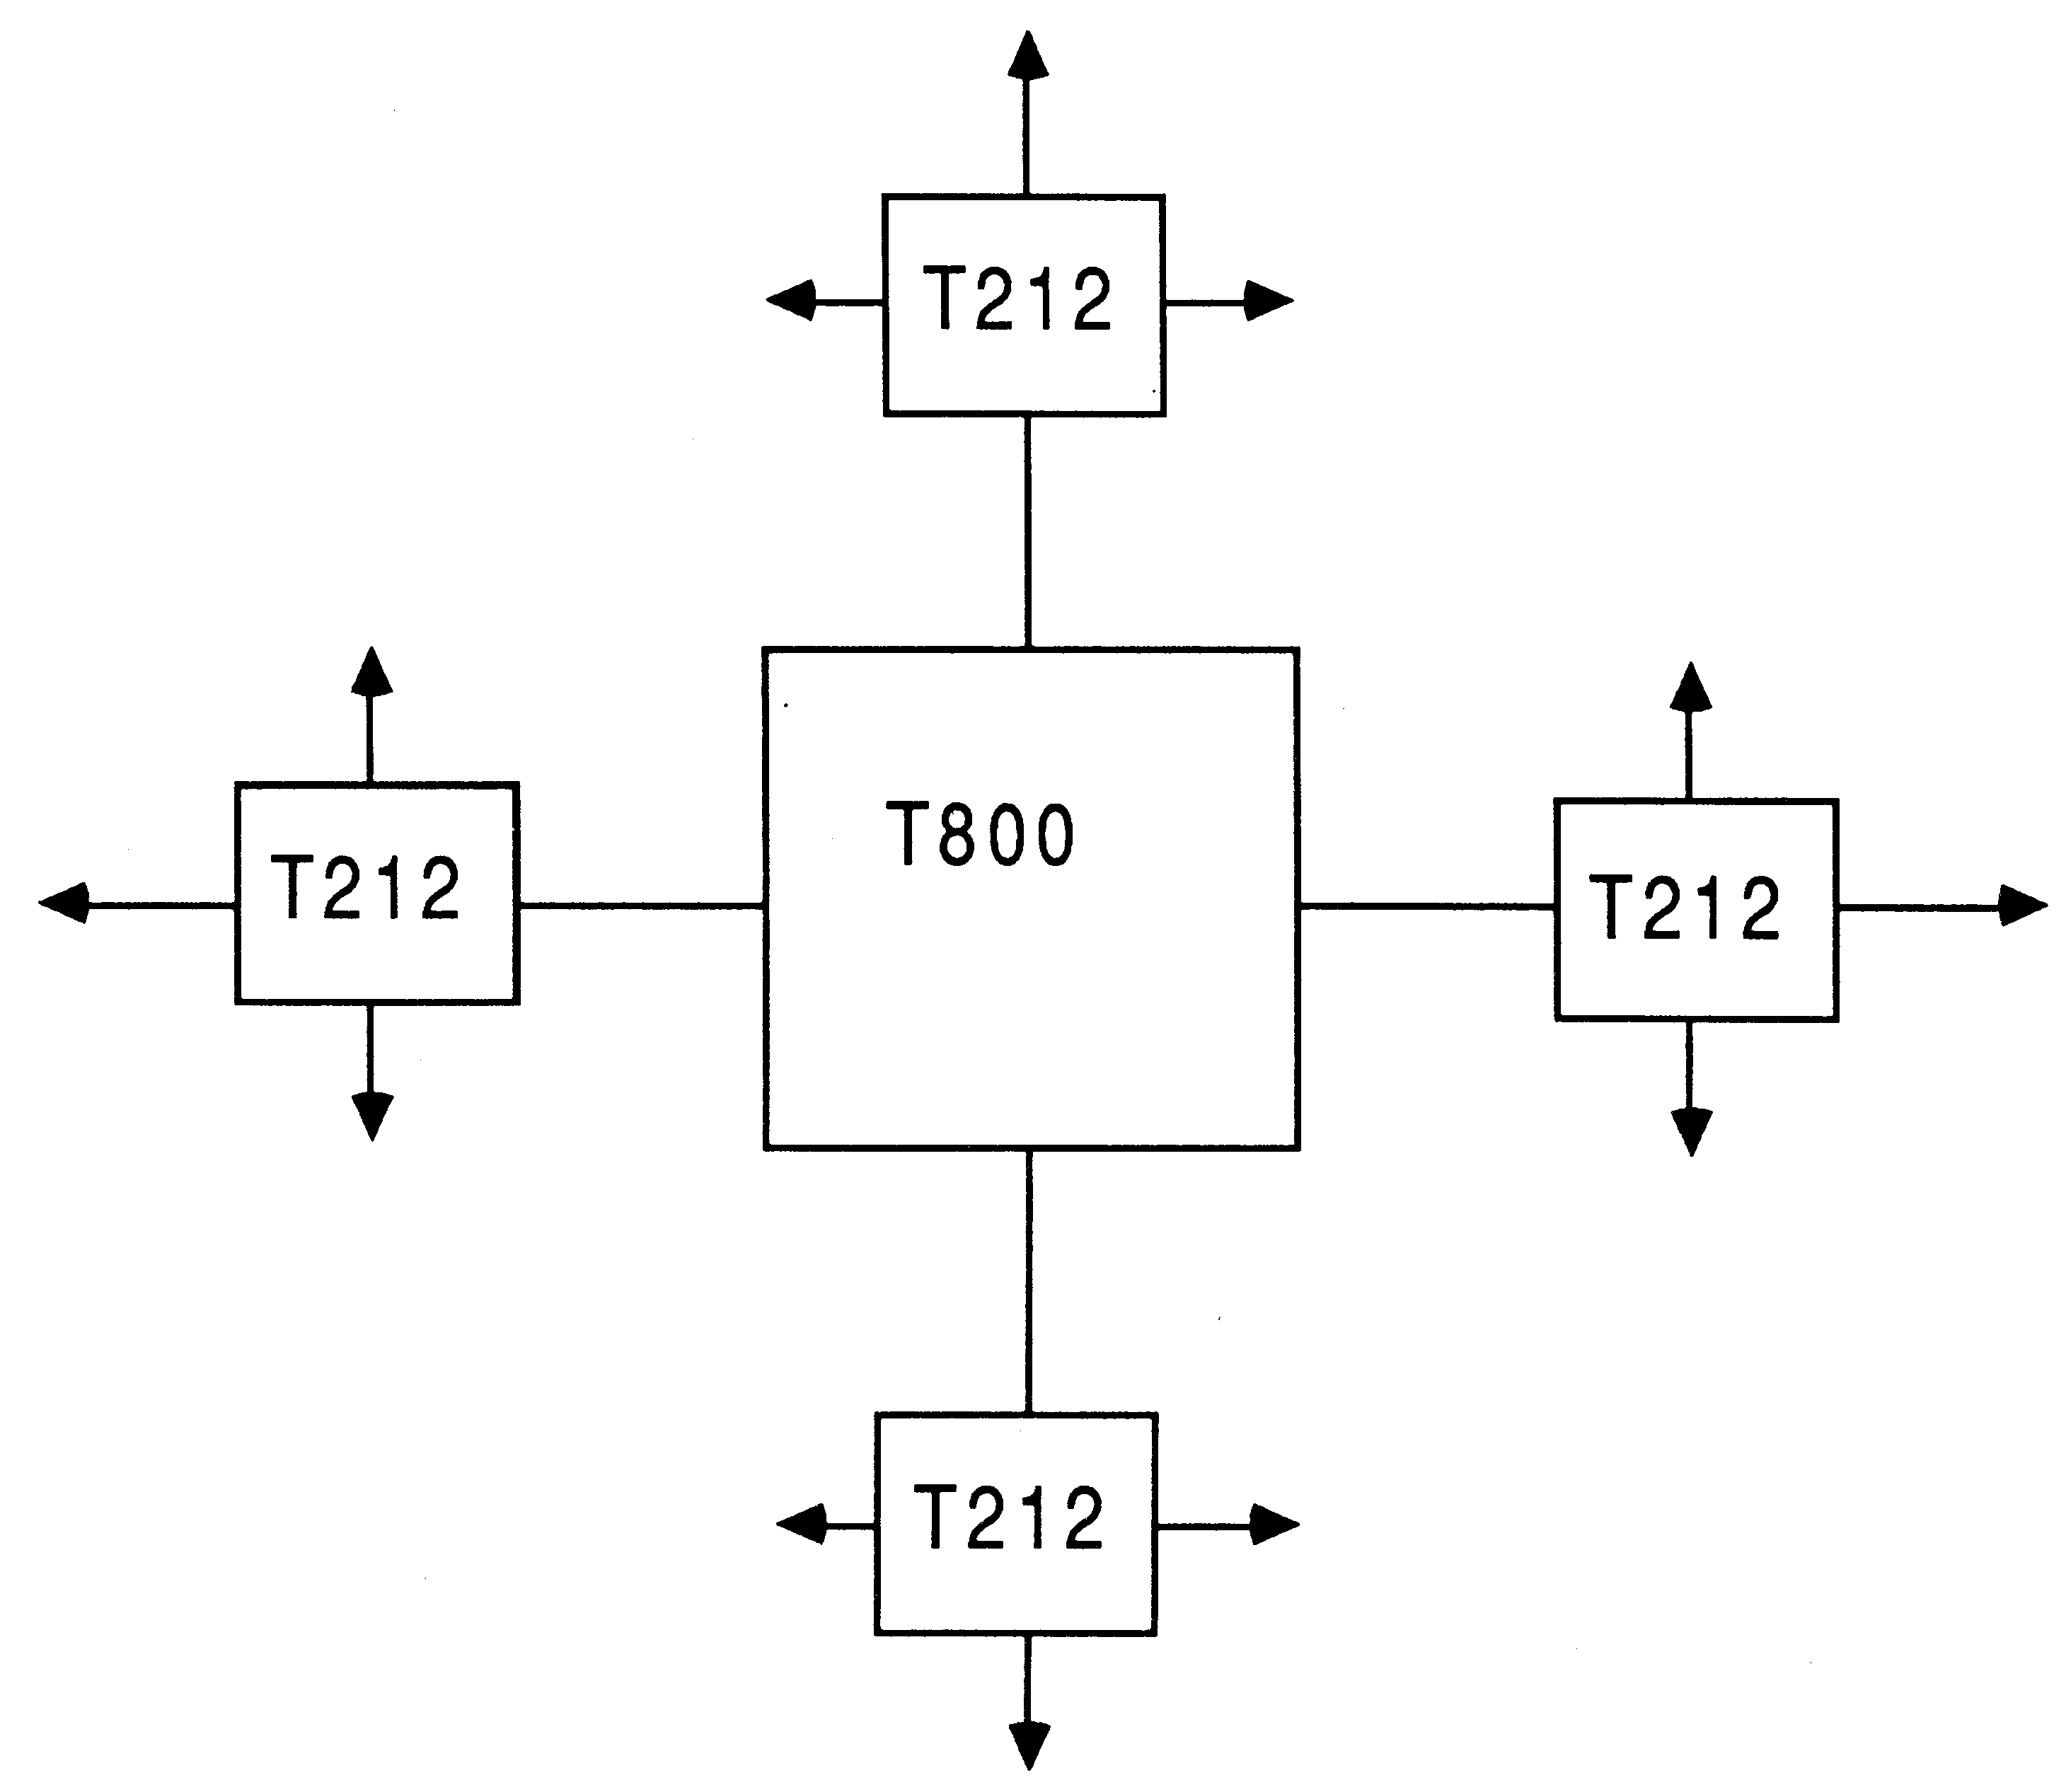 T800 as a co-processor